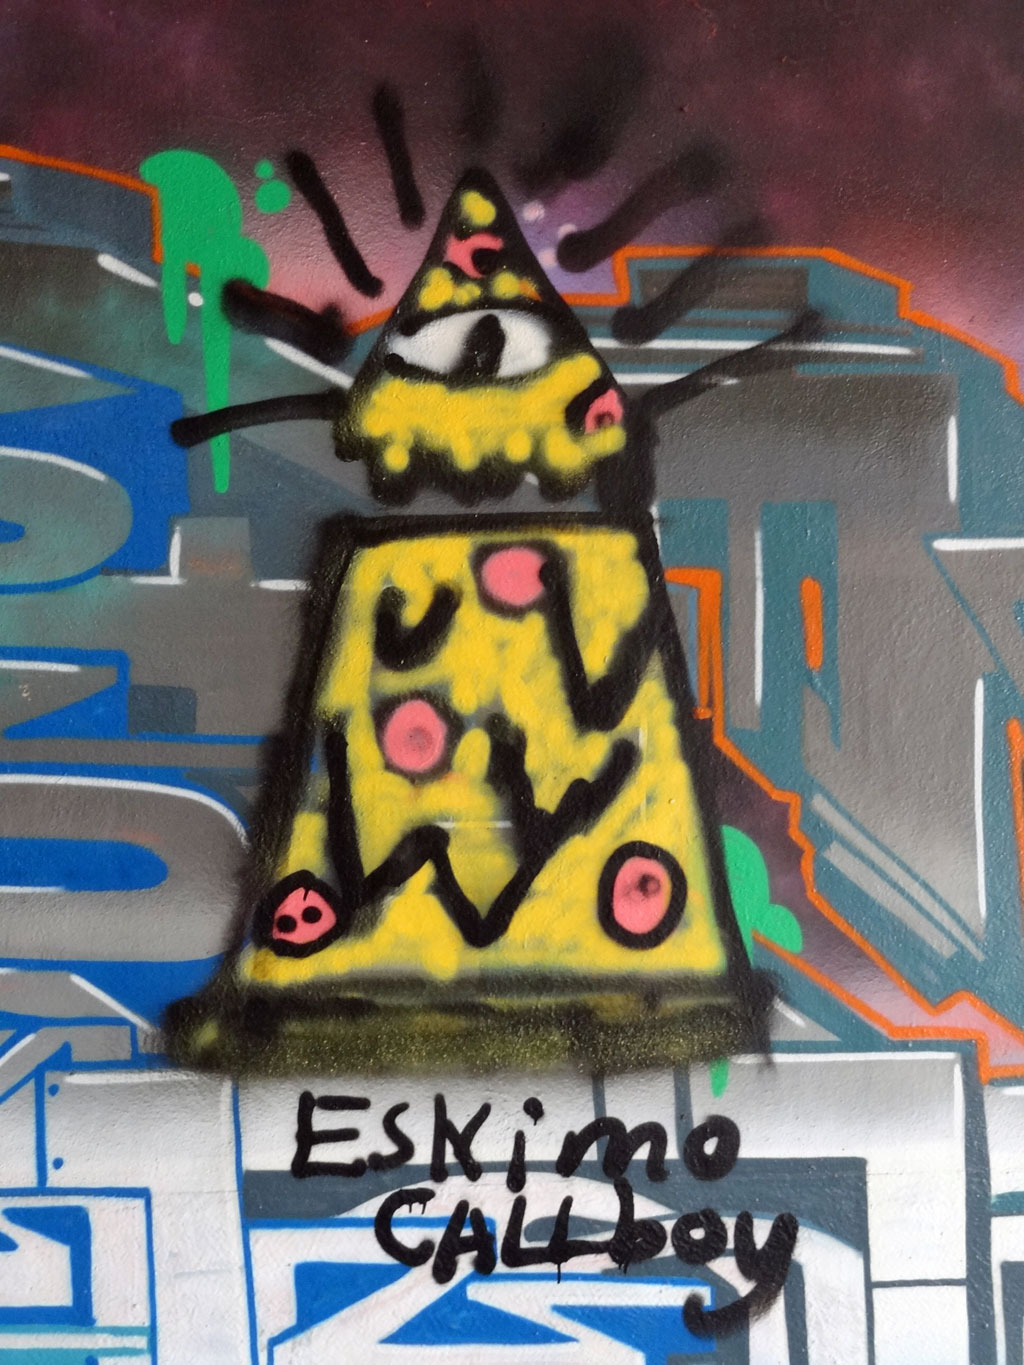 eskimo-callboy-graffiti-hall-of-fame-am-ratswegkreisel